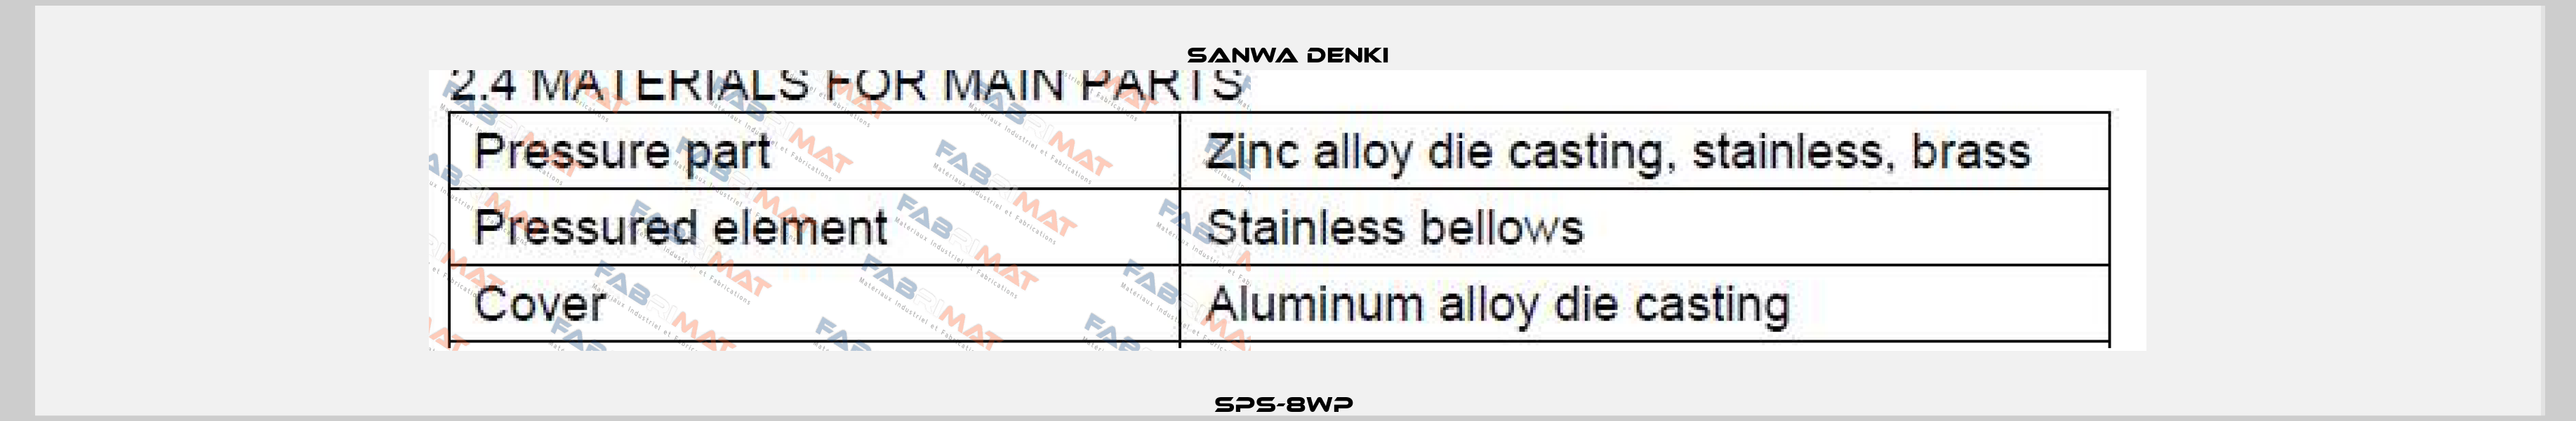 SPS-8WP  Sanwa Denki